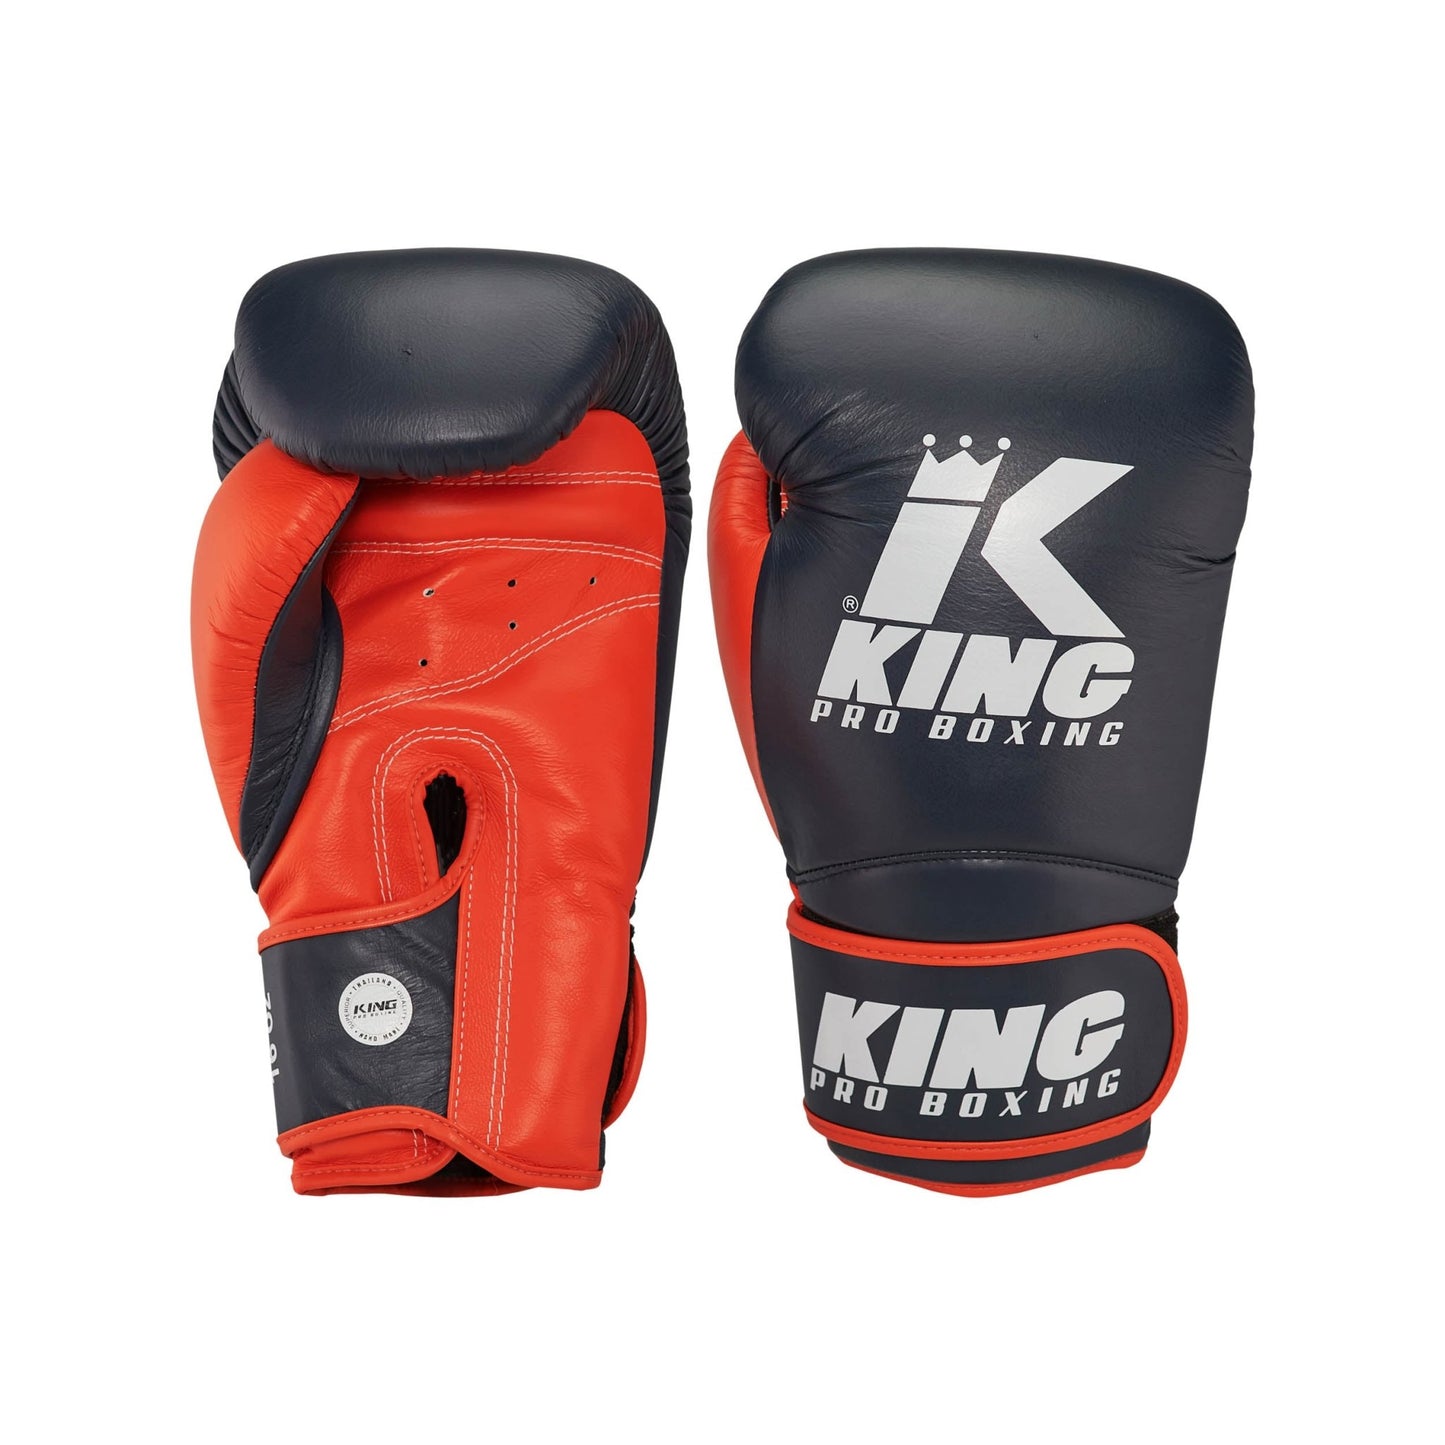 King Pro Boxing Gloves Star 15 King Pro Boxing